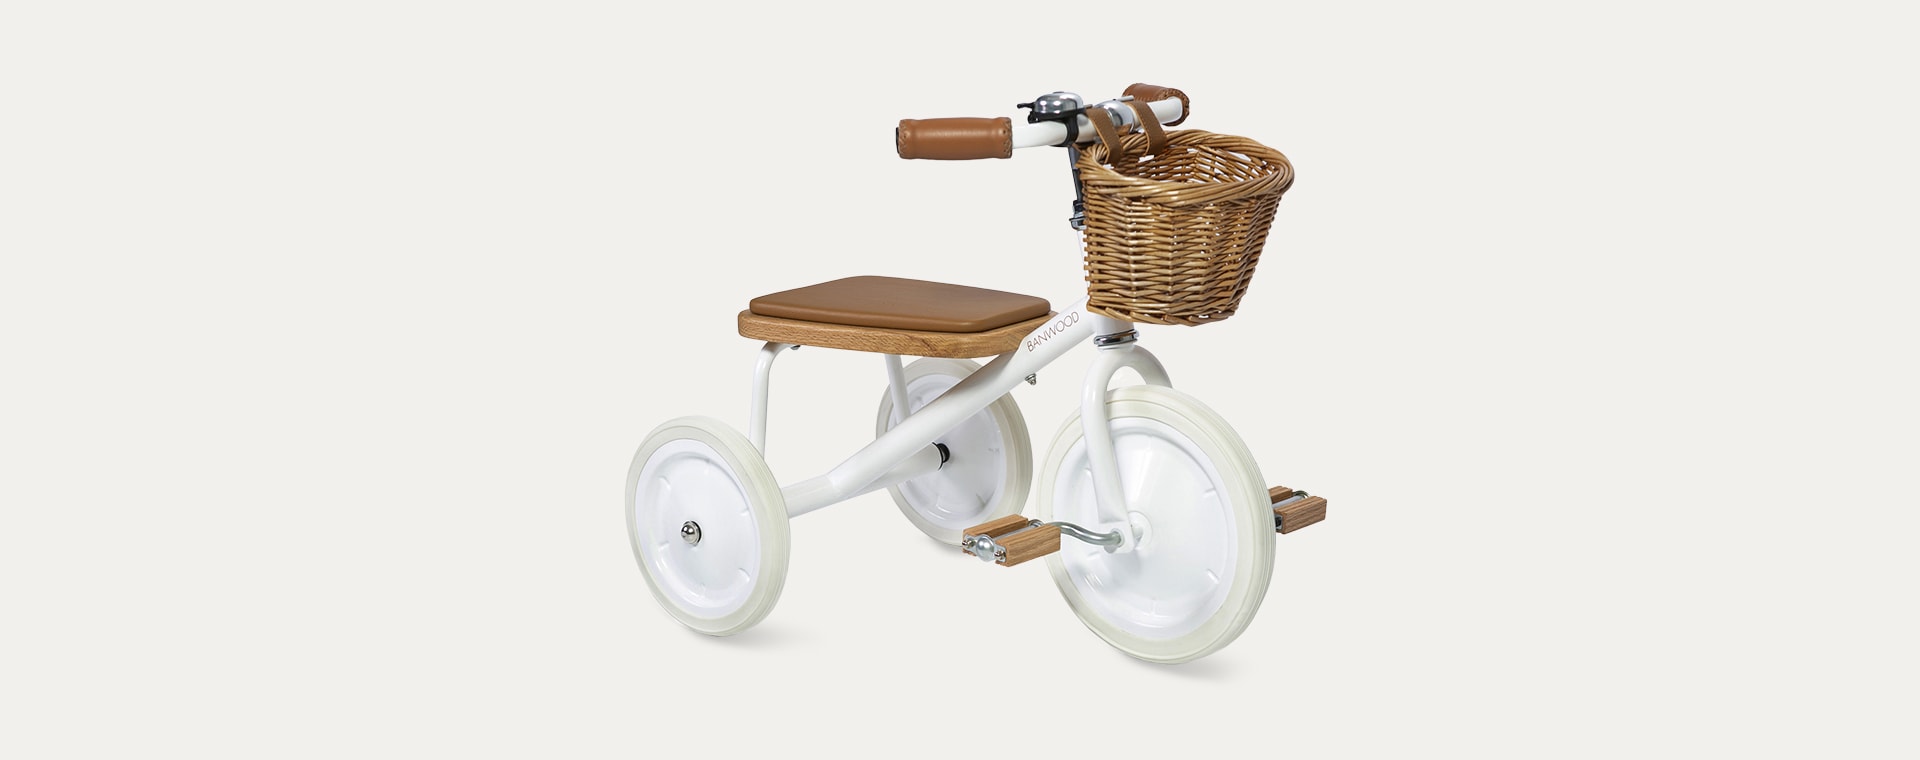 Buy the Banwood Trike at KIDLY UK